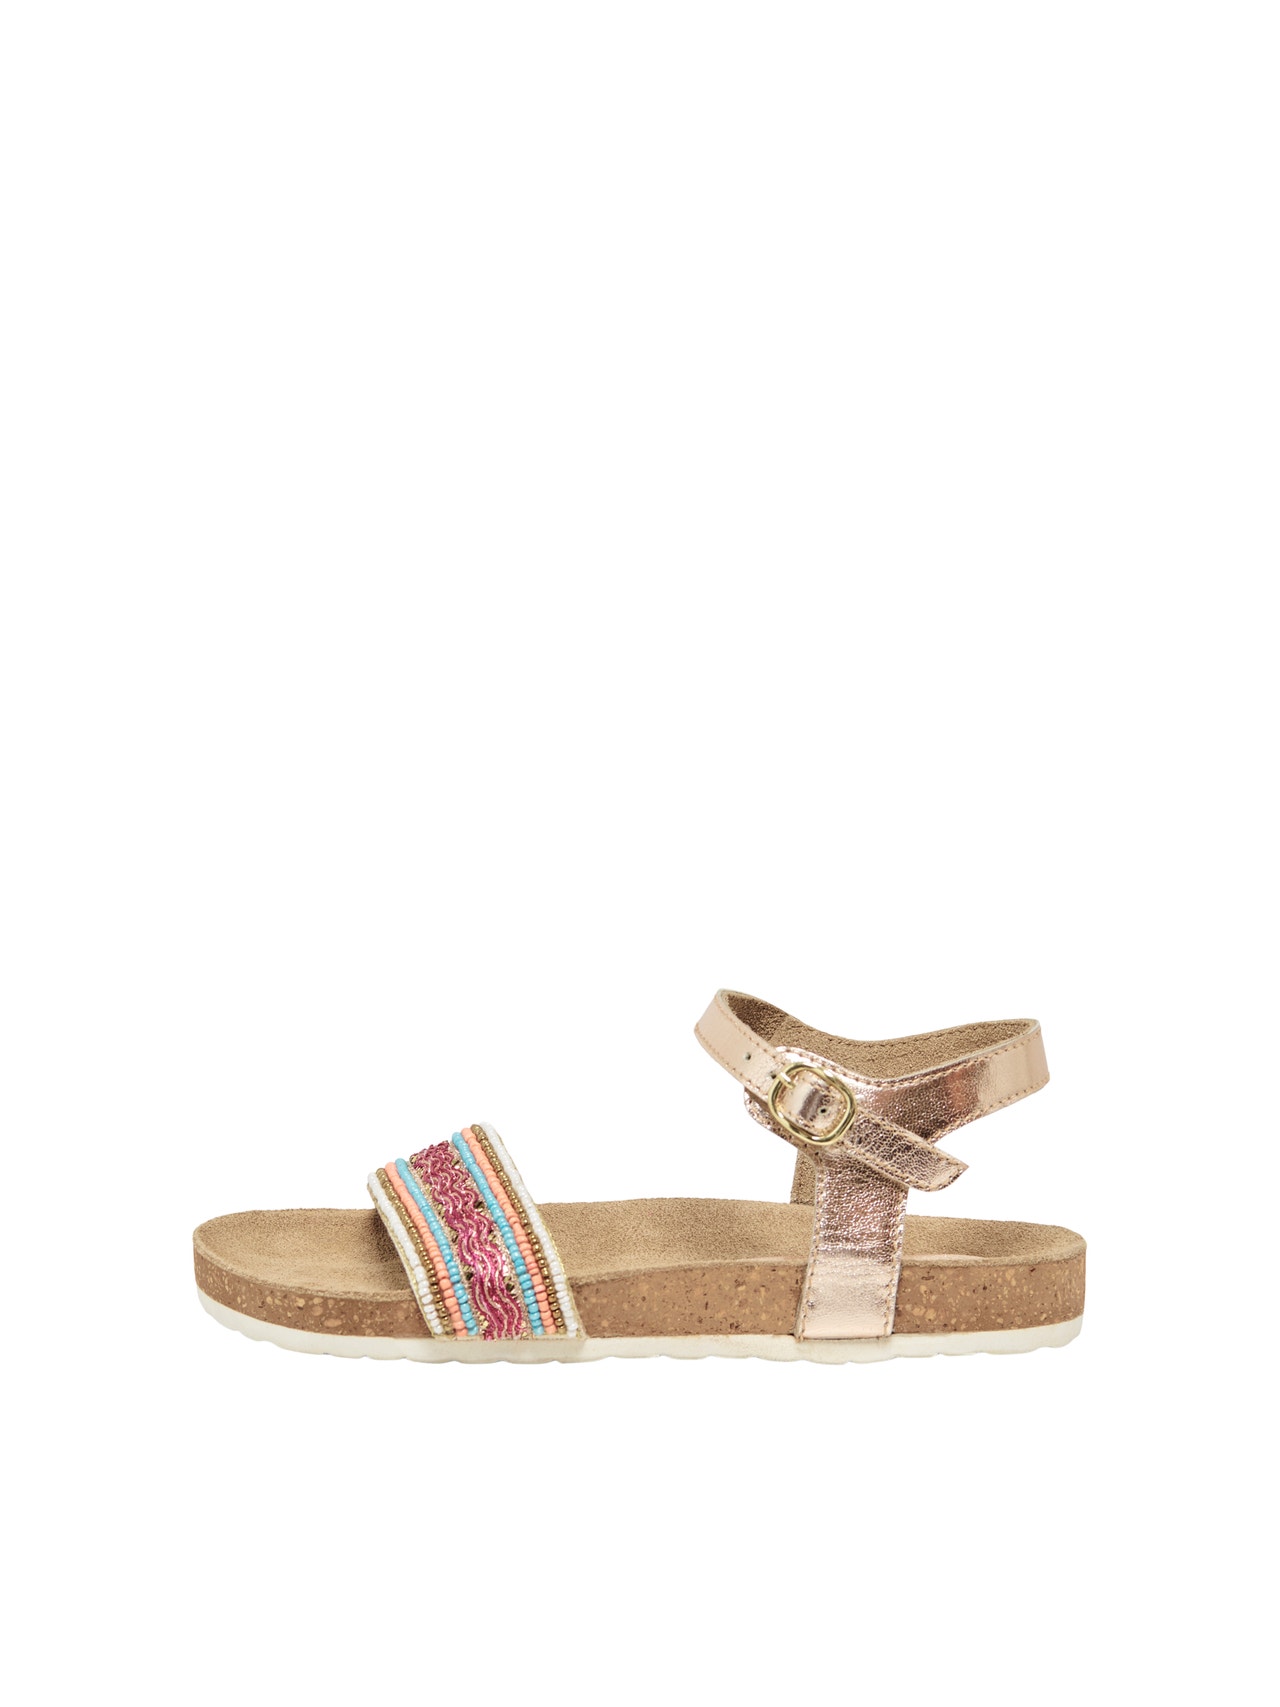 ONLY Open toe Adjustable strap Sandal -Gold Colour - 15292178